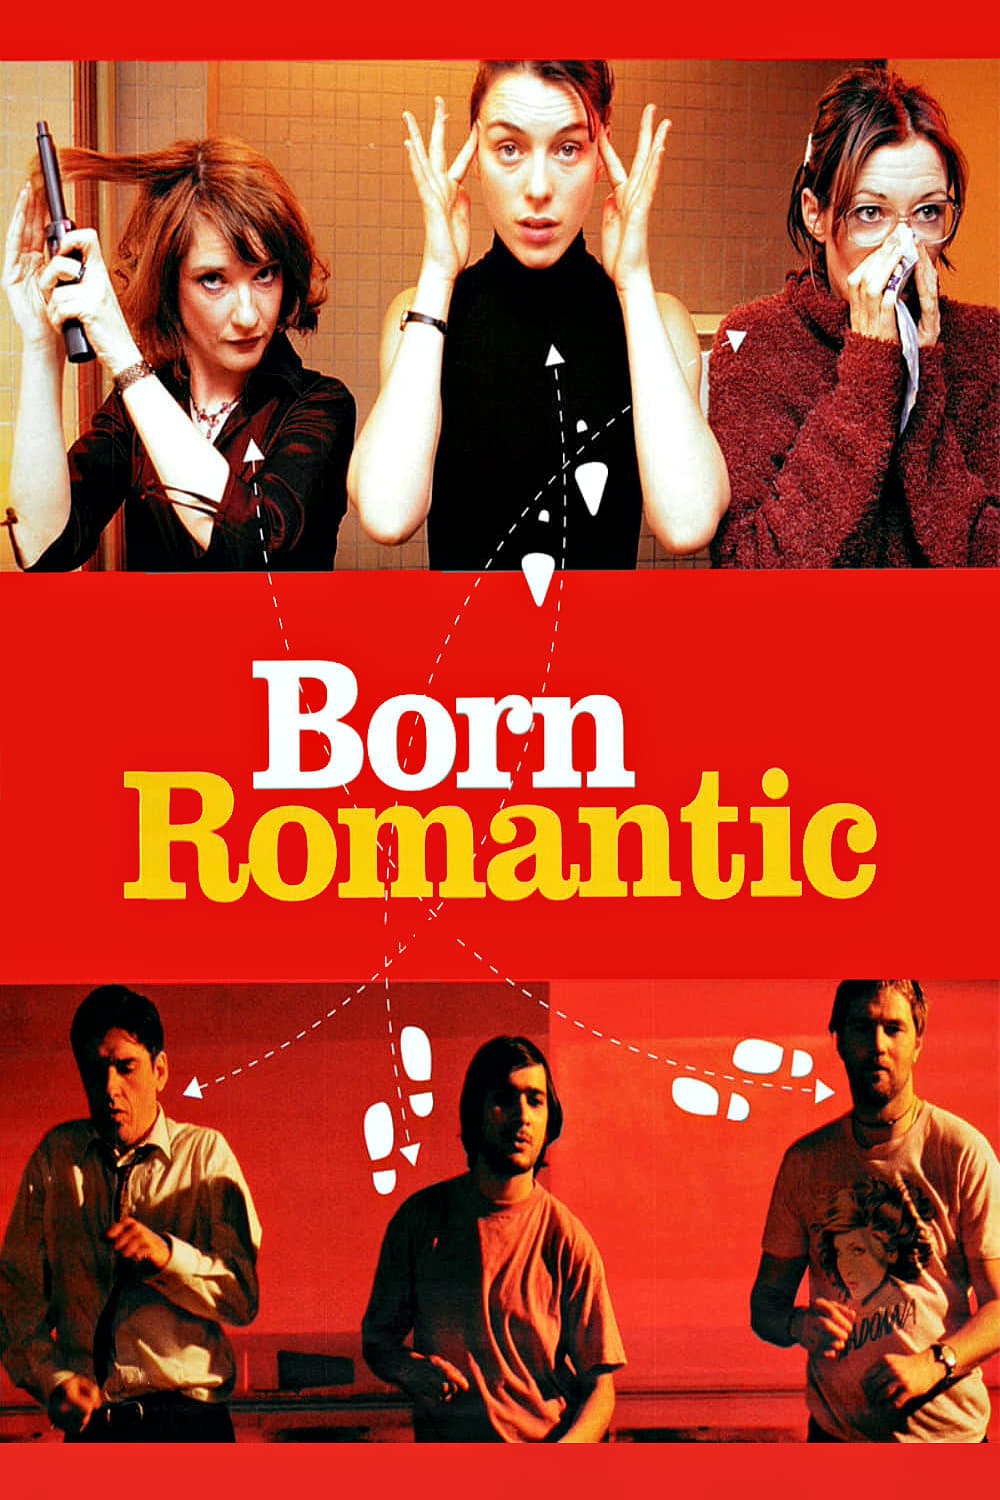 Born Romantic (2000)